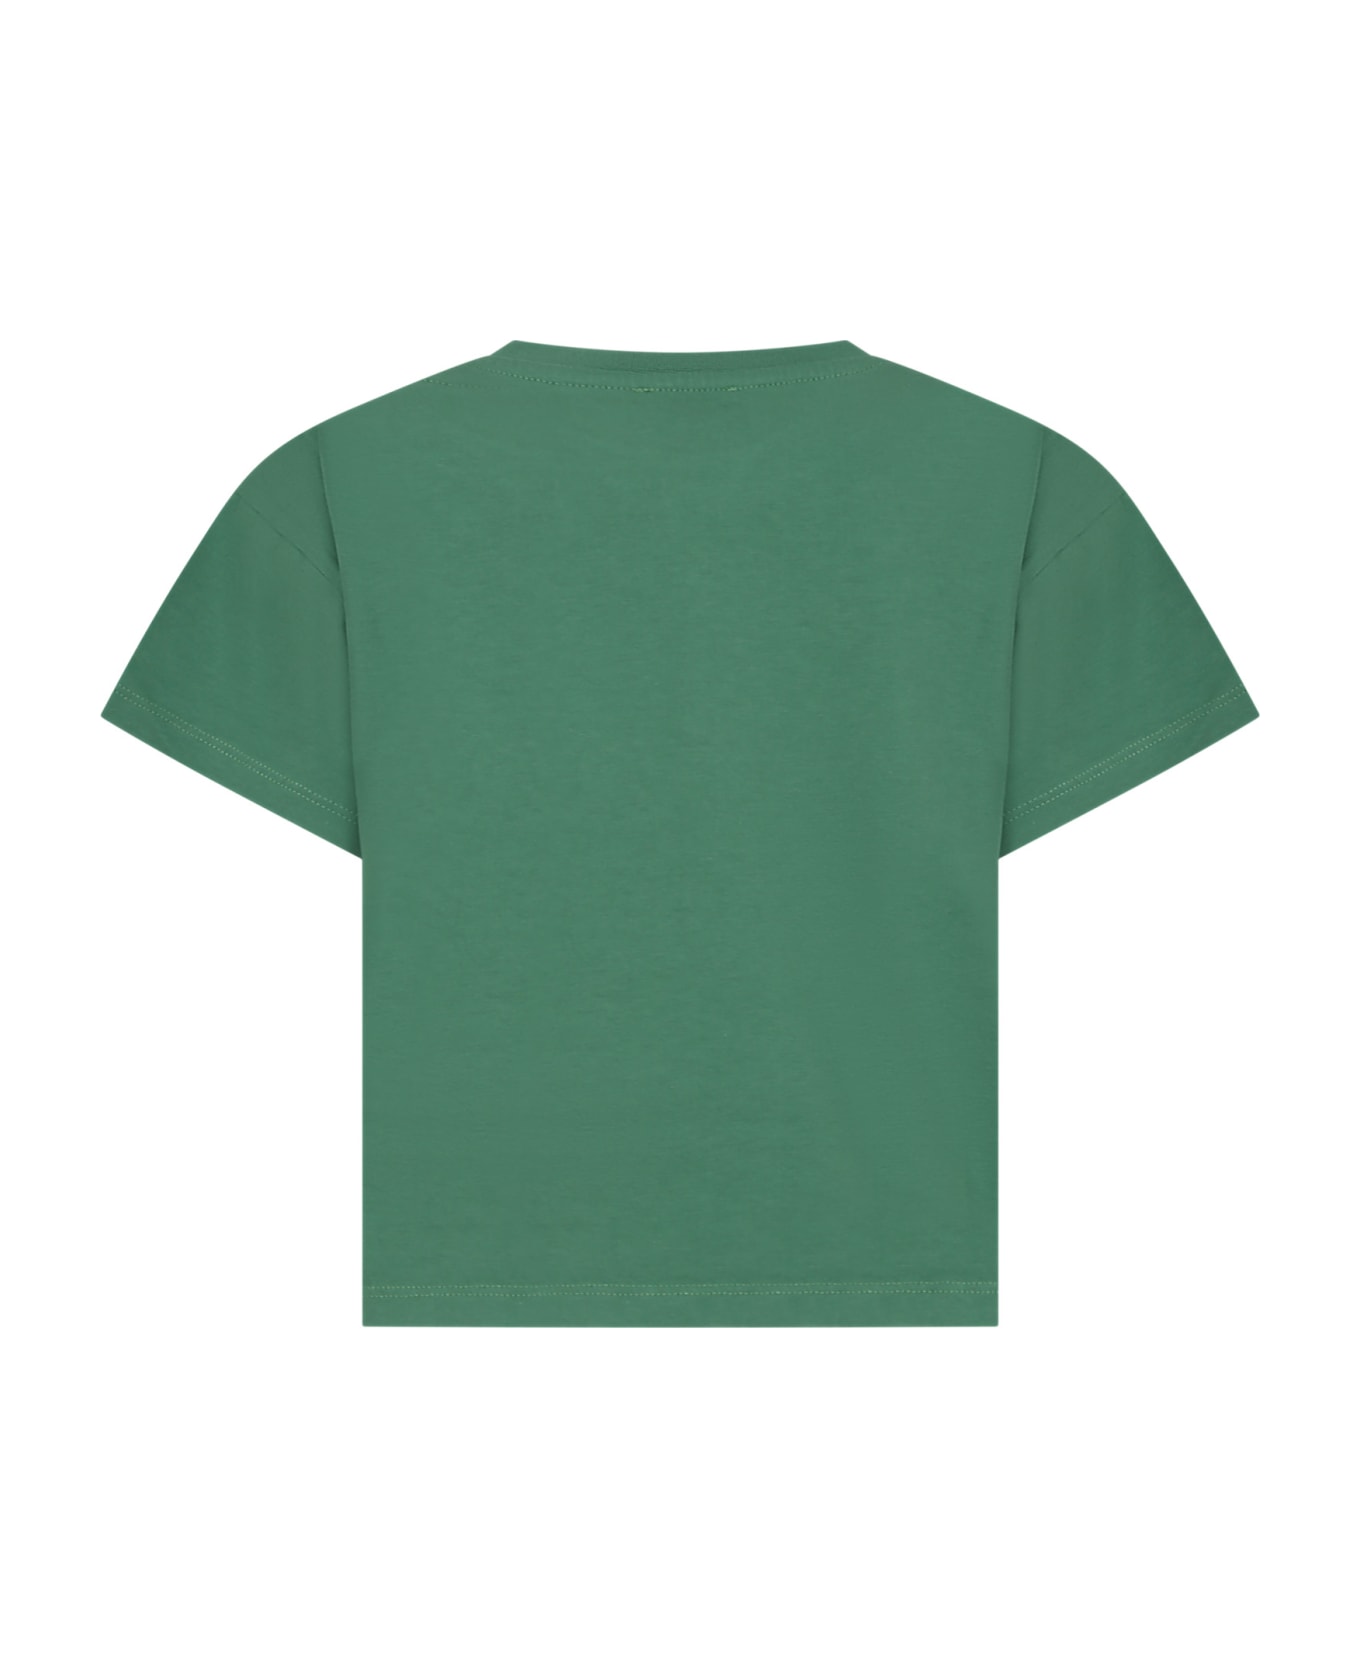 Kenzo Kids Green T-shirt For Kids With Logo - Green